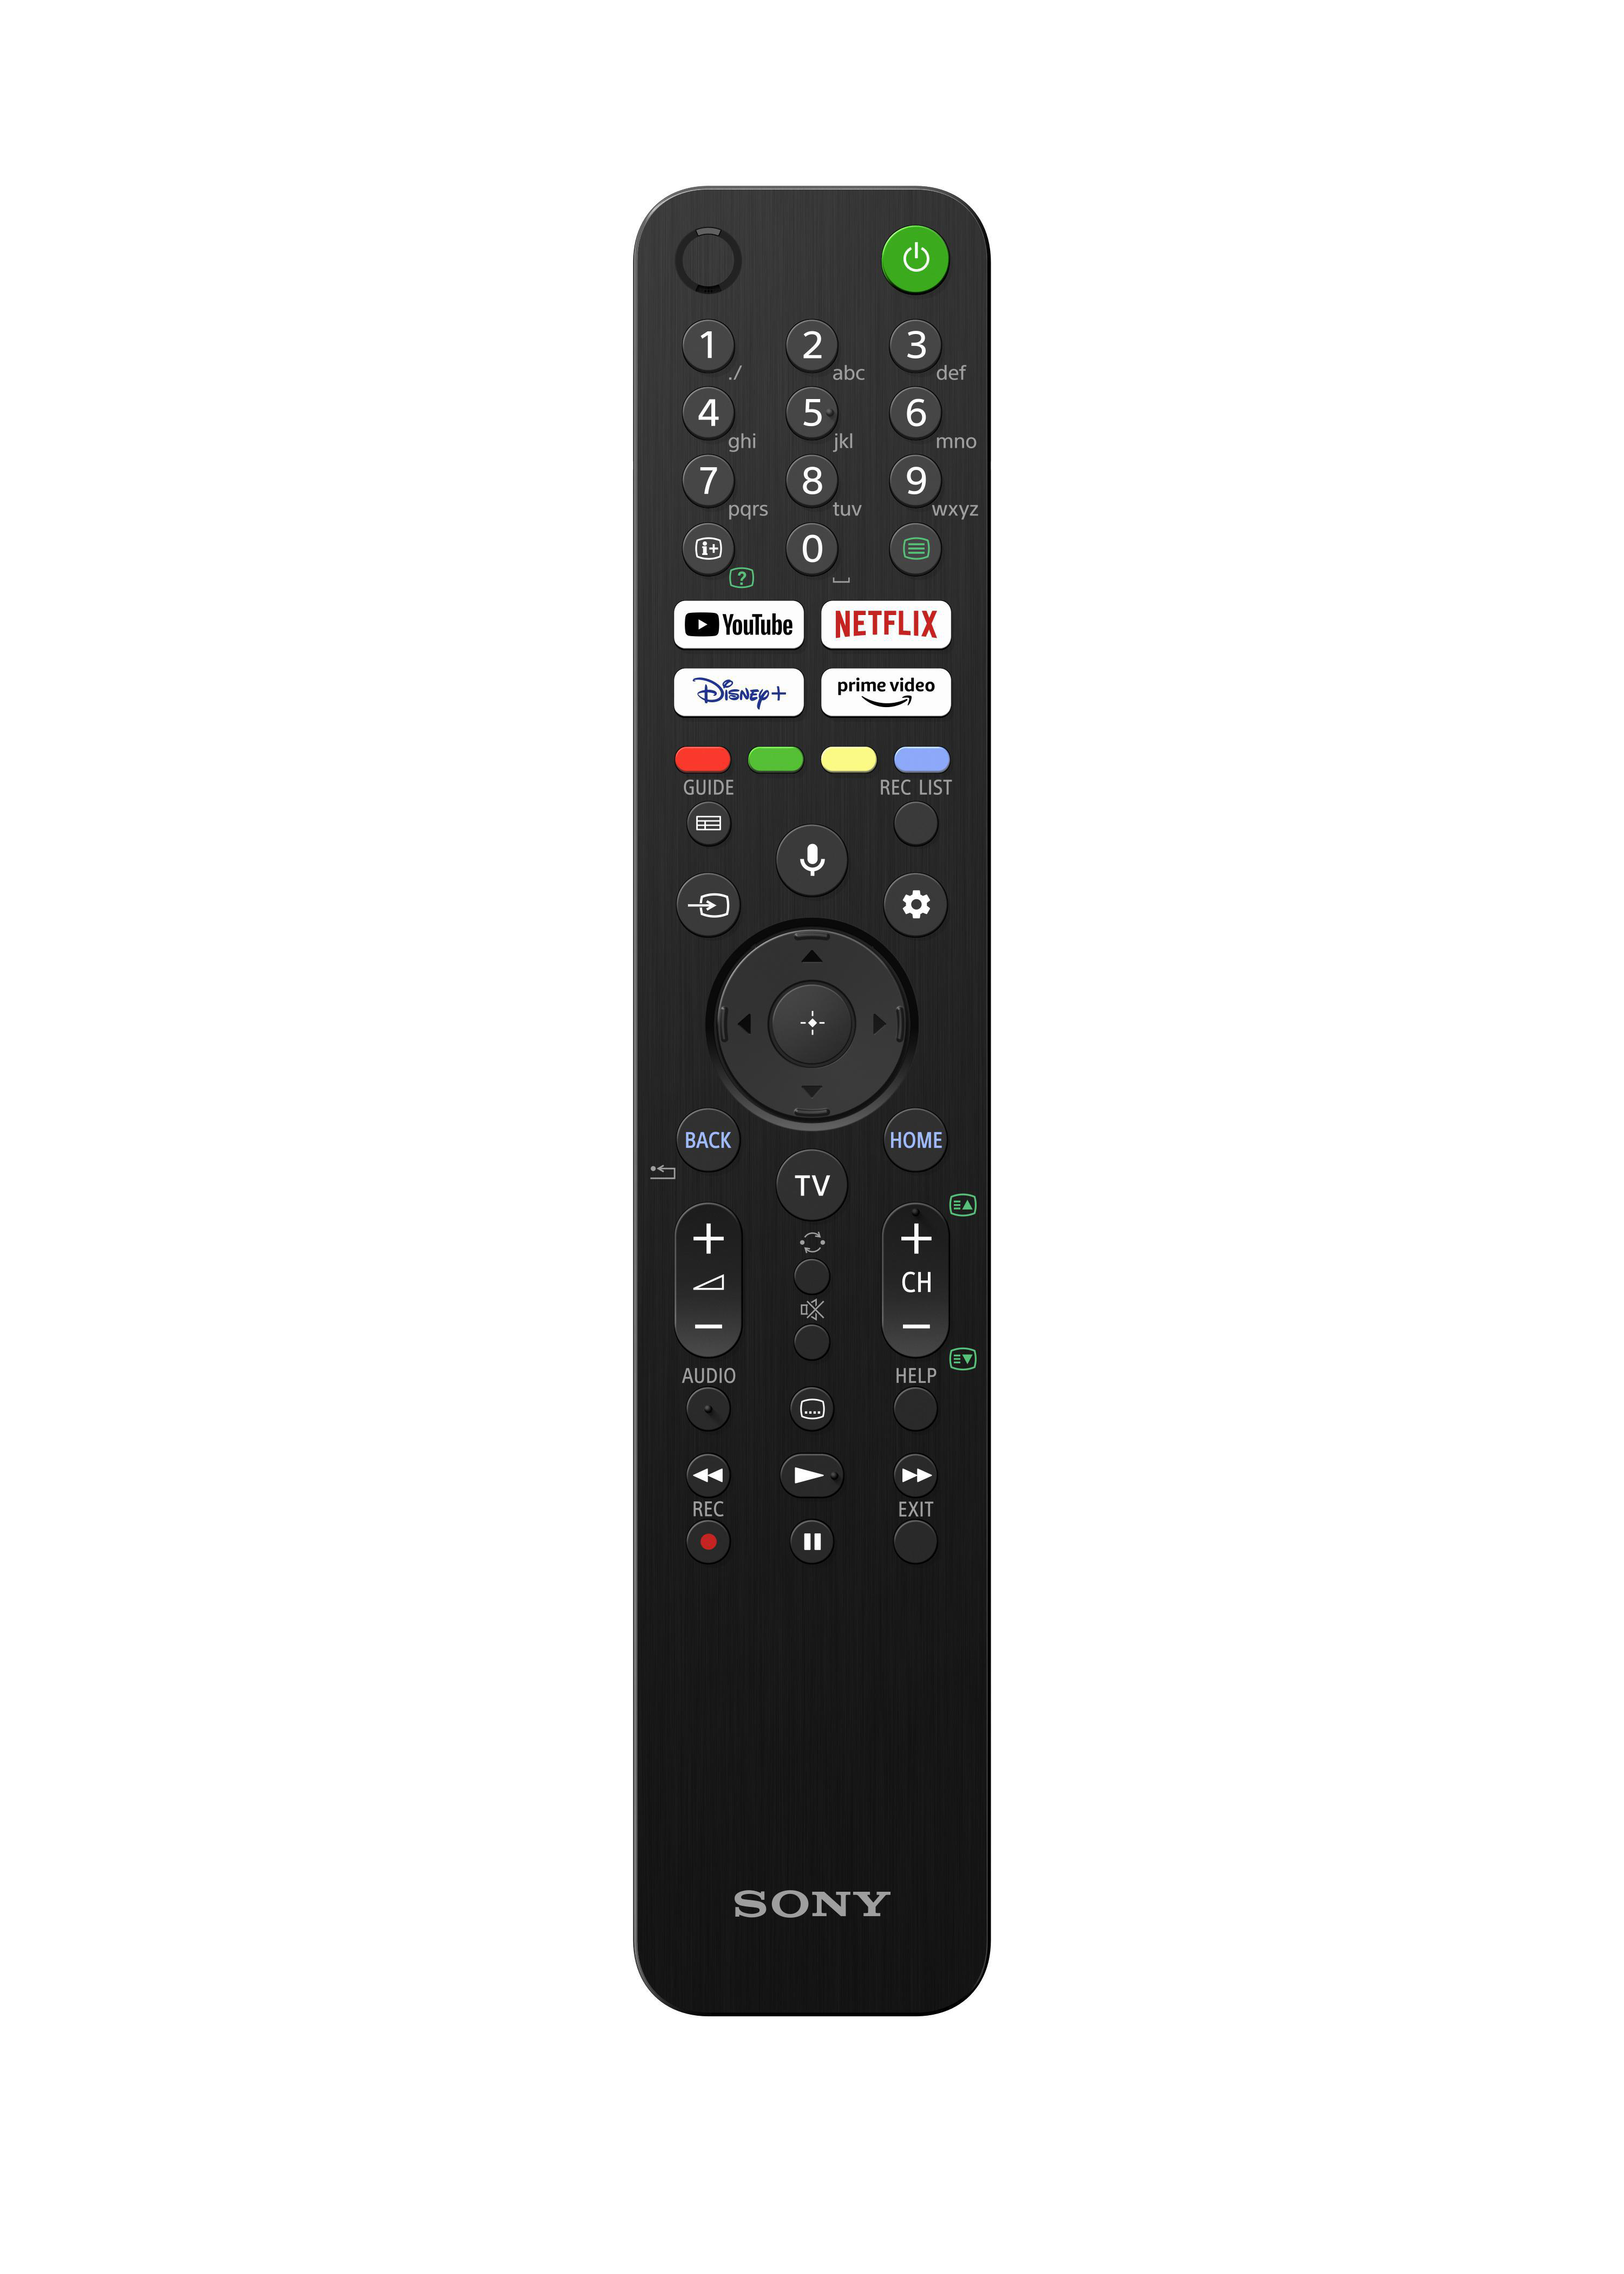 126 LED XR-50X92J Google (Flat, 4K, Zoll / TV, TV) cm, 50 SONY TV SMART UHD